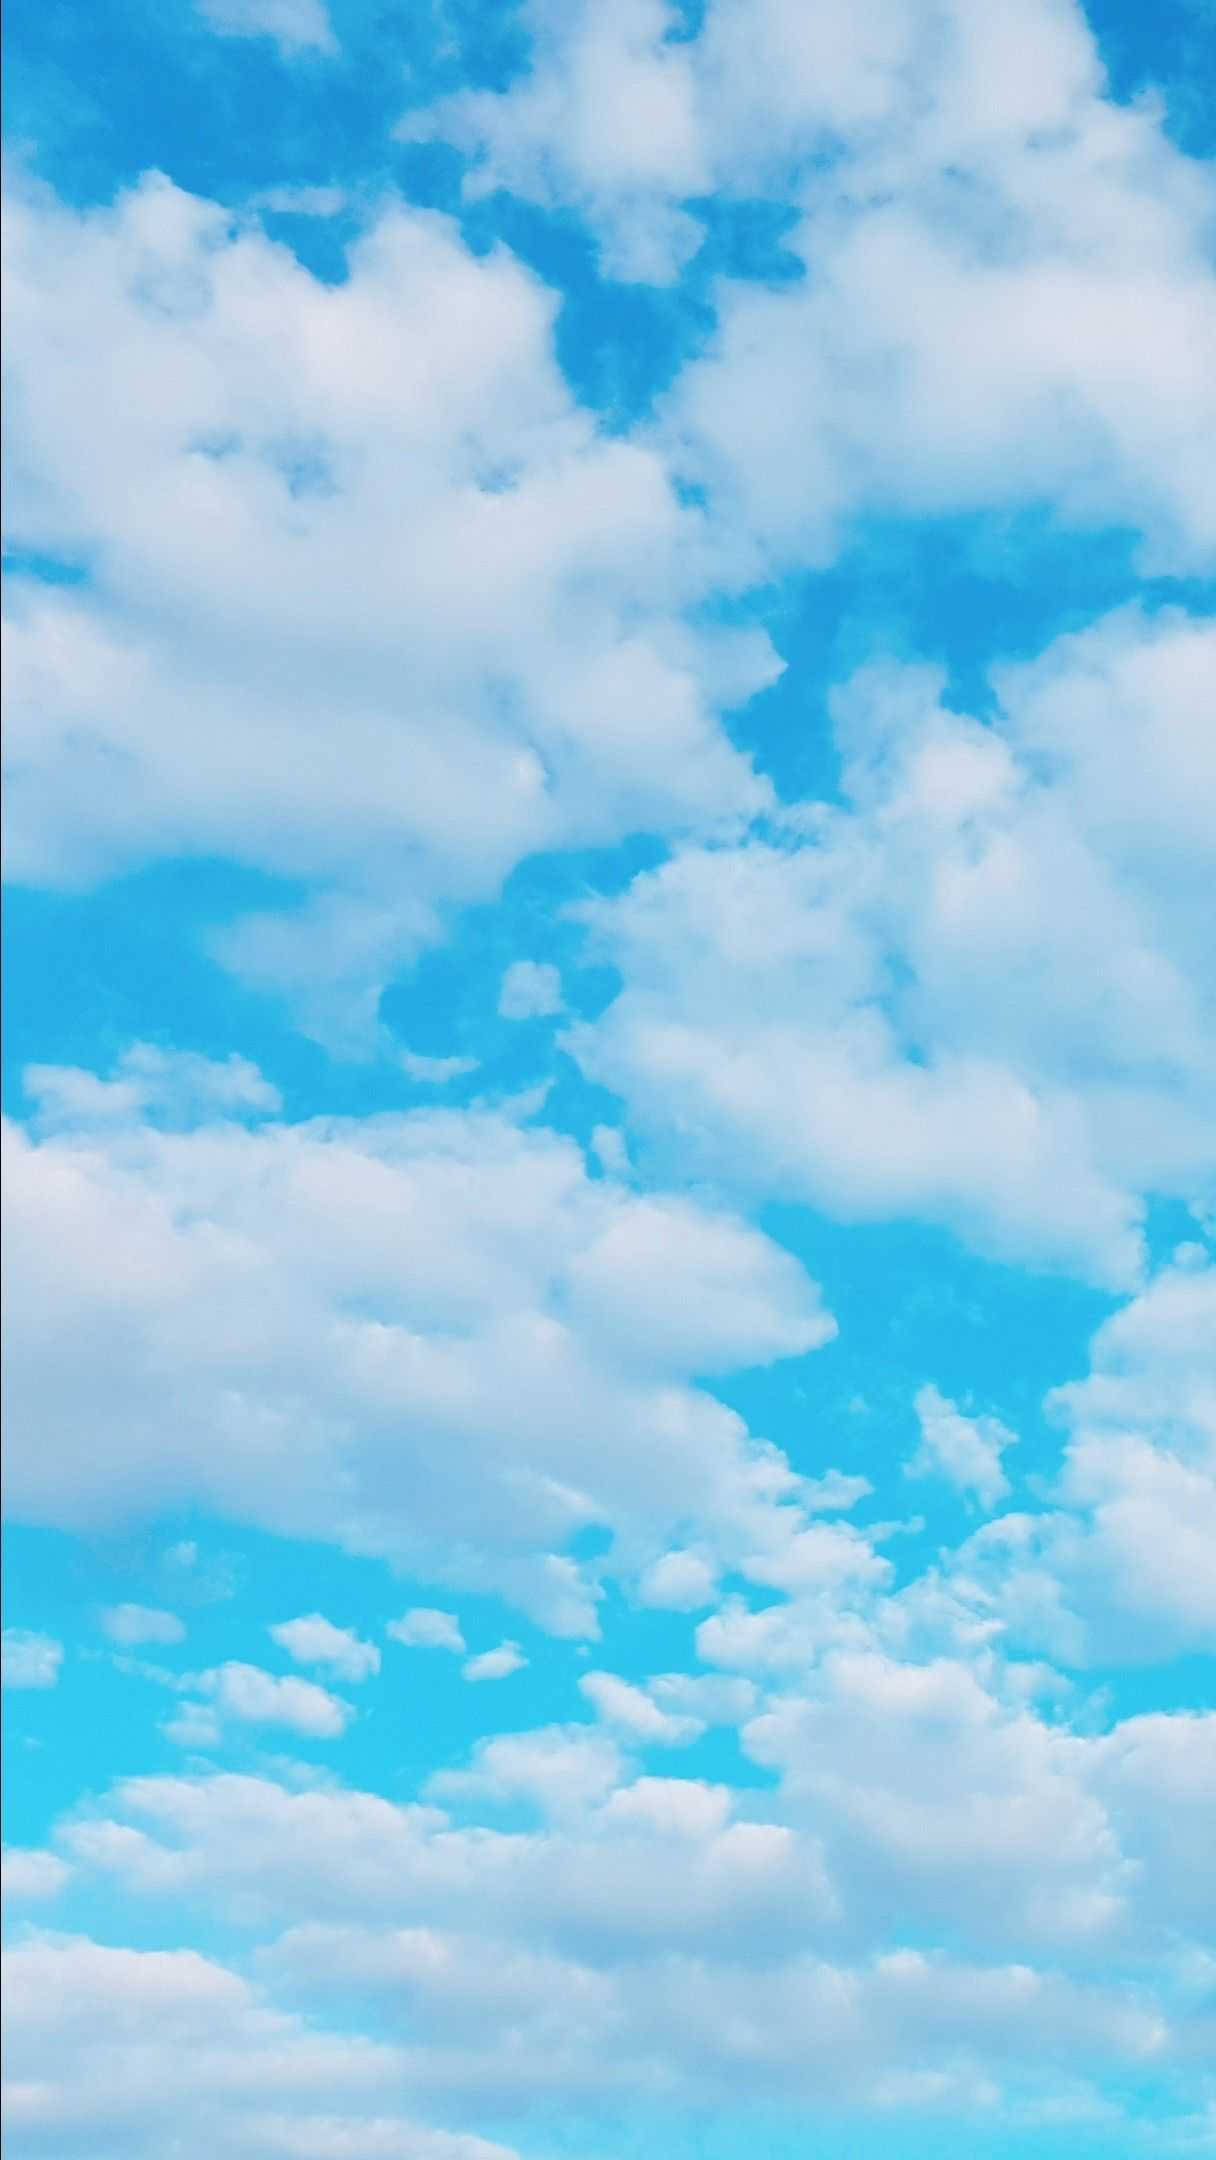 A blue sky with white clouds. - Sky, pastel blue, light blue